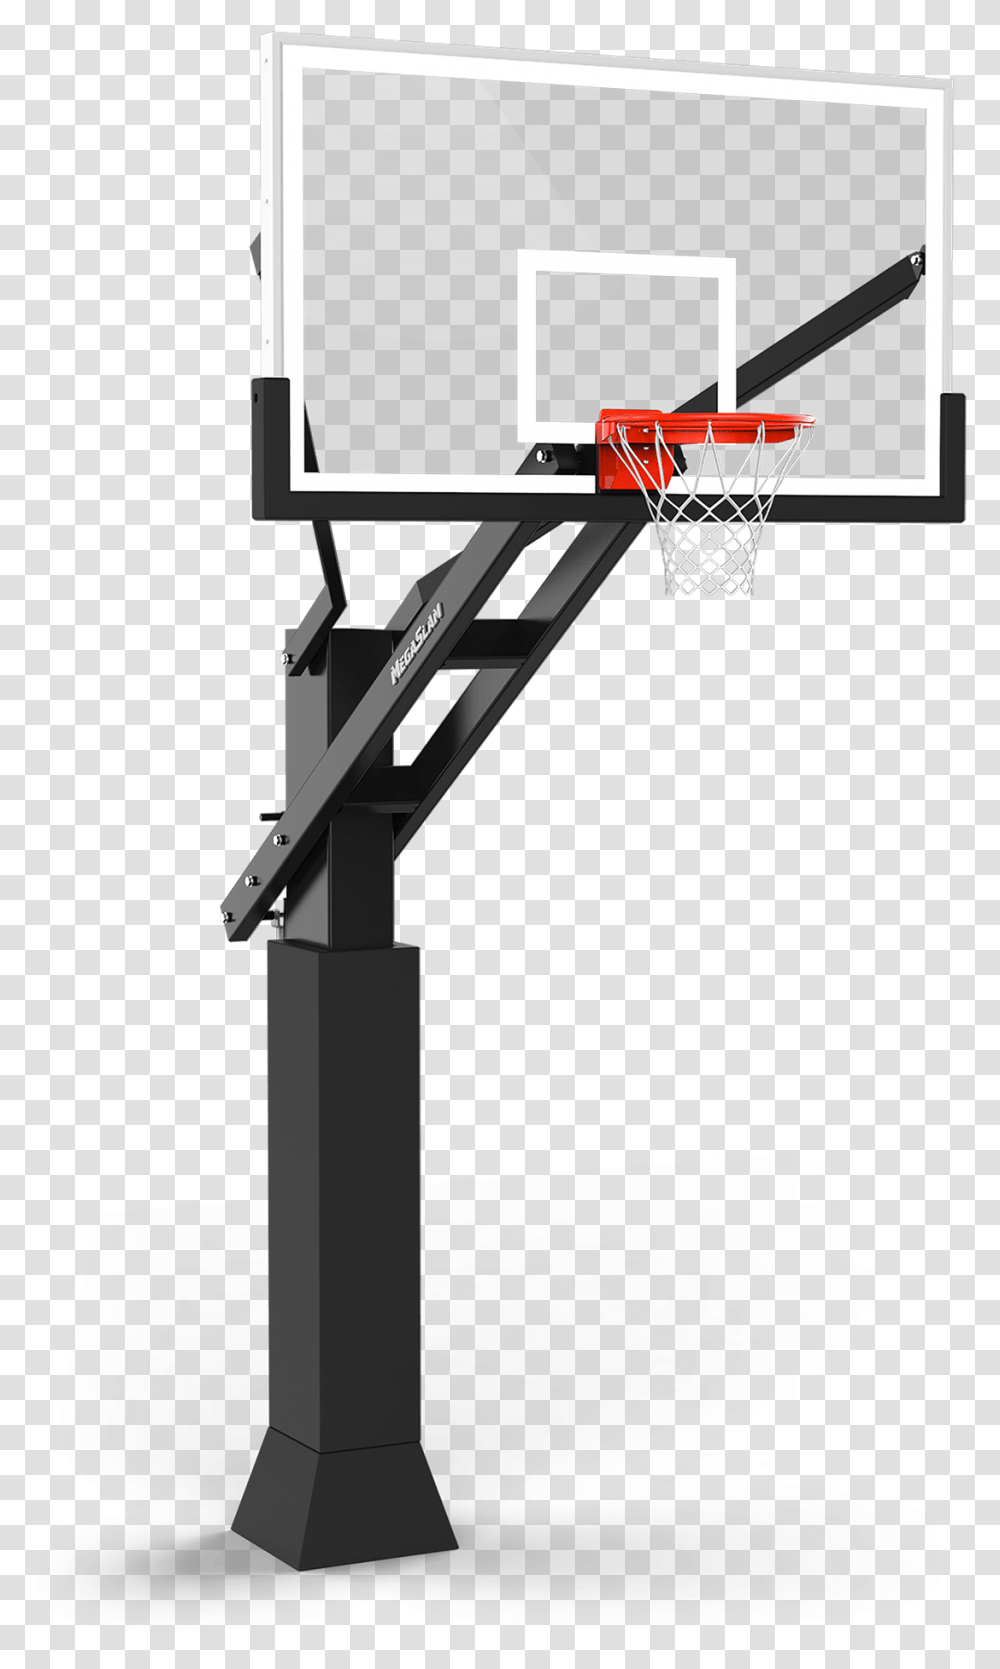 Outdoor Basketball Goal Mega Slam Hoops Outdoor Basketball Goal Transparent Png